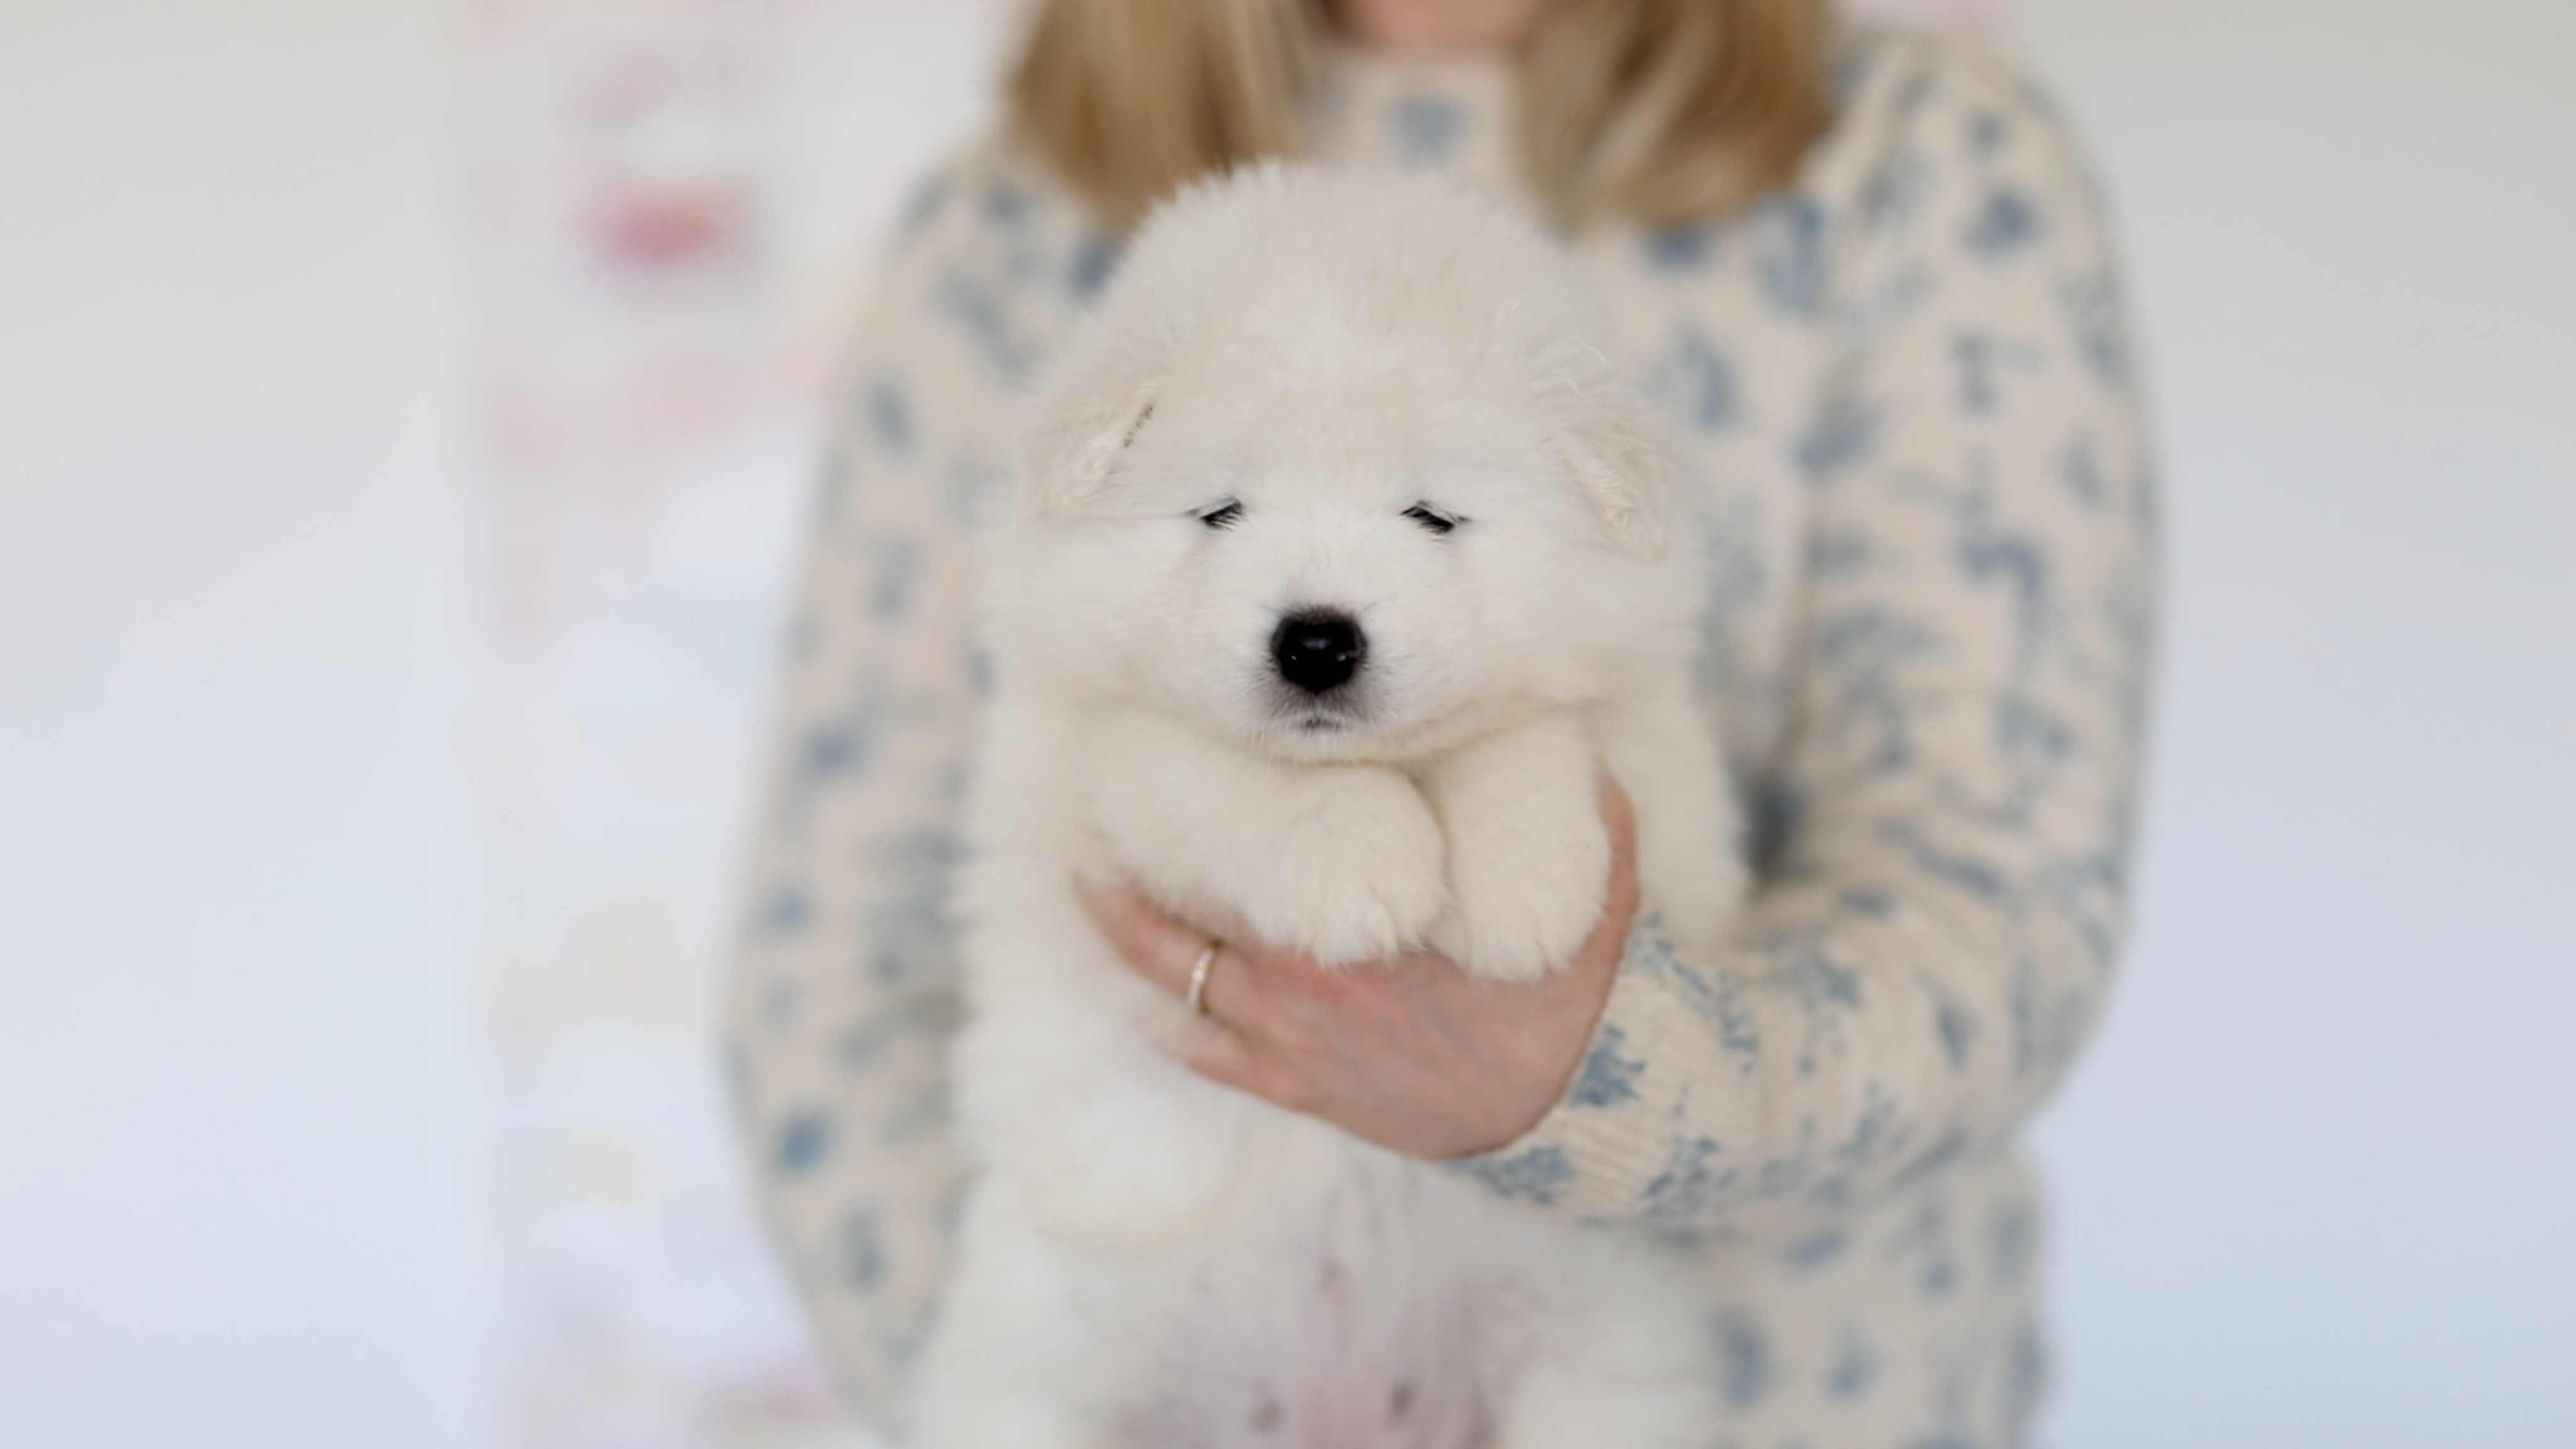 Main puppy image